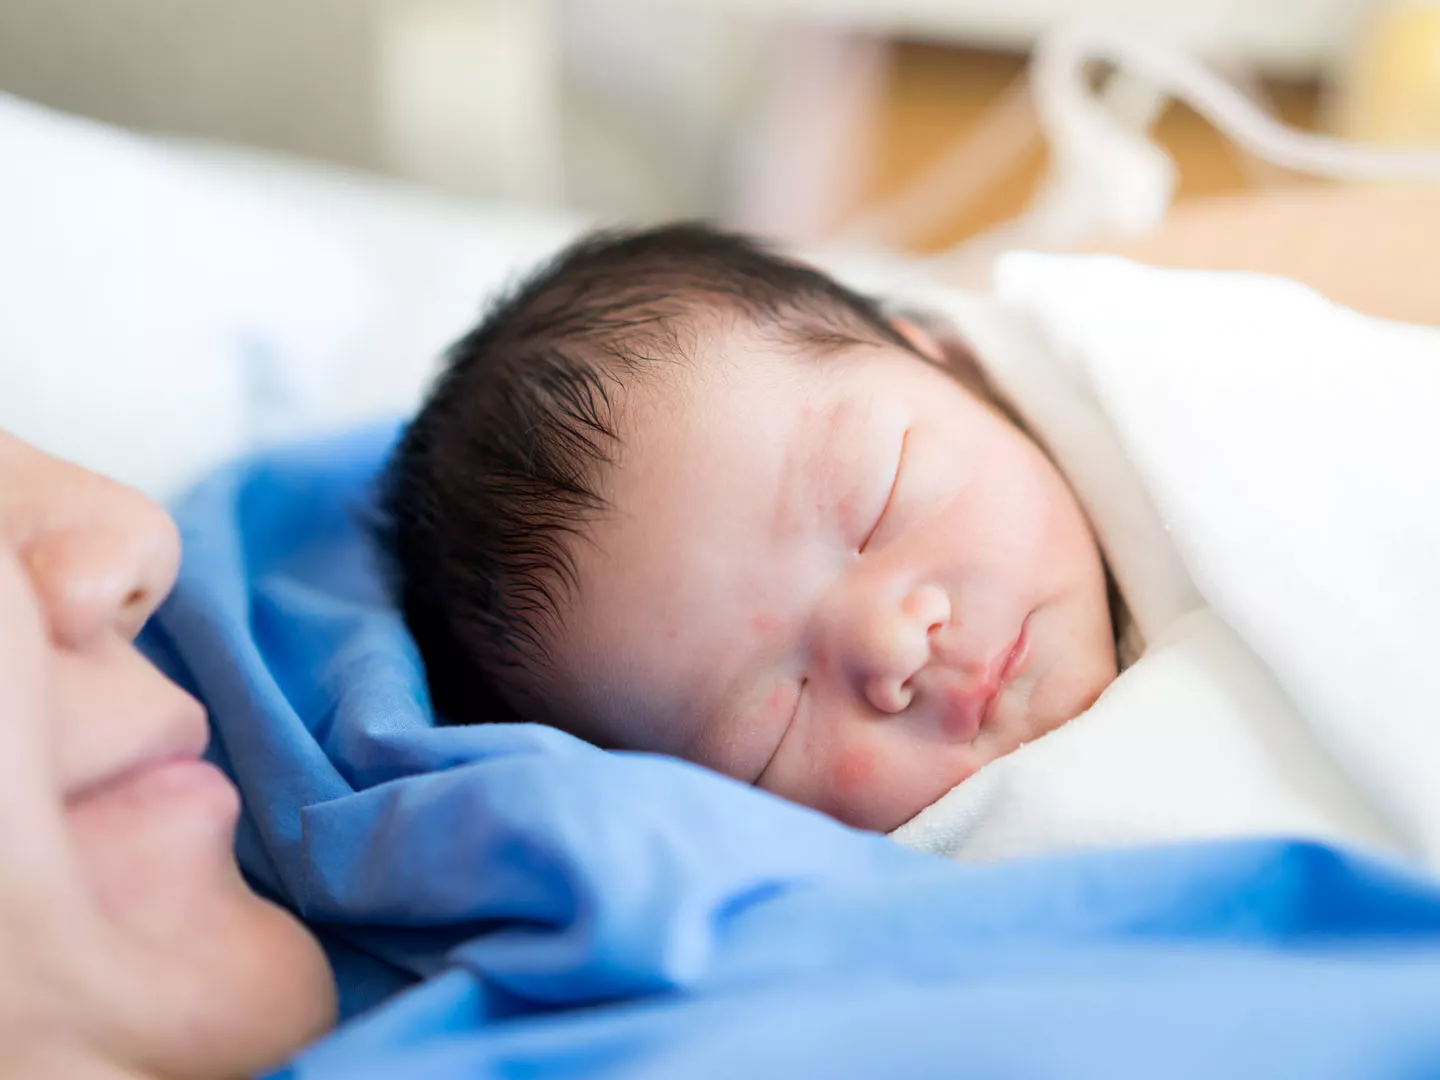 Newborn Photography Ideas in Hospital